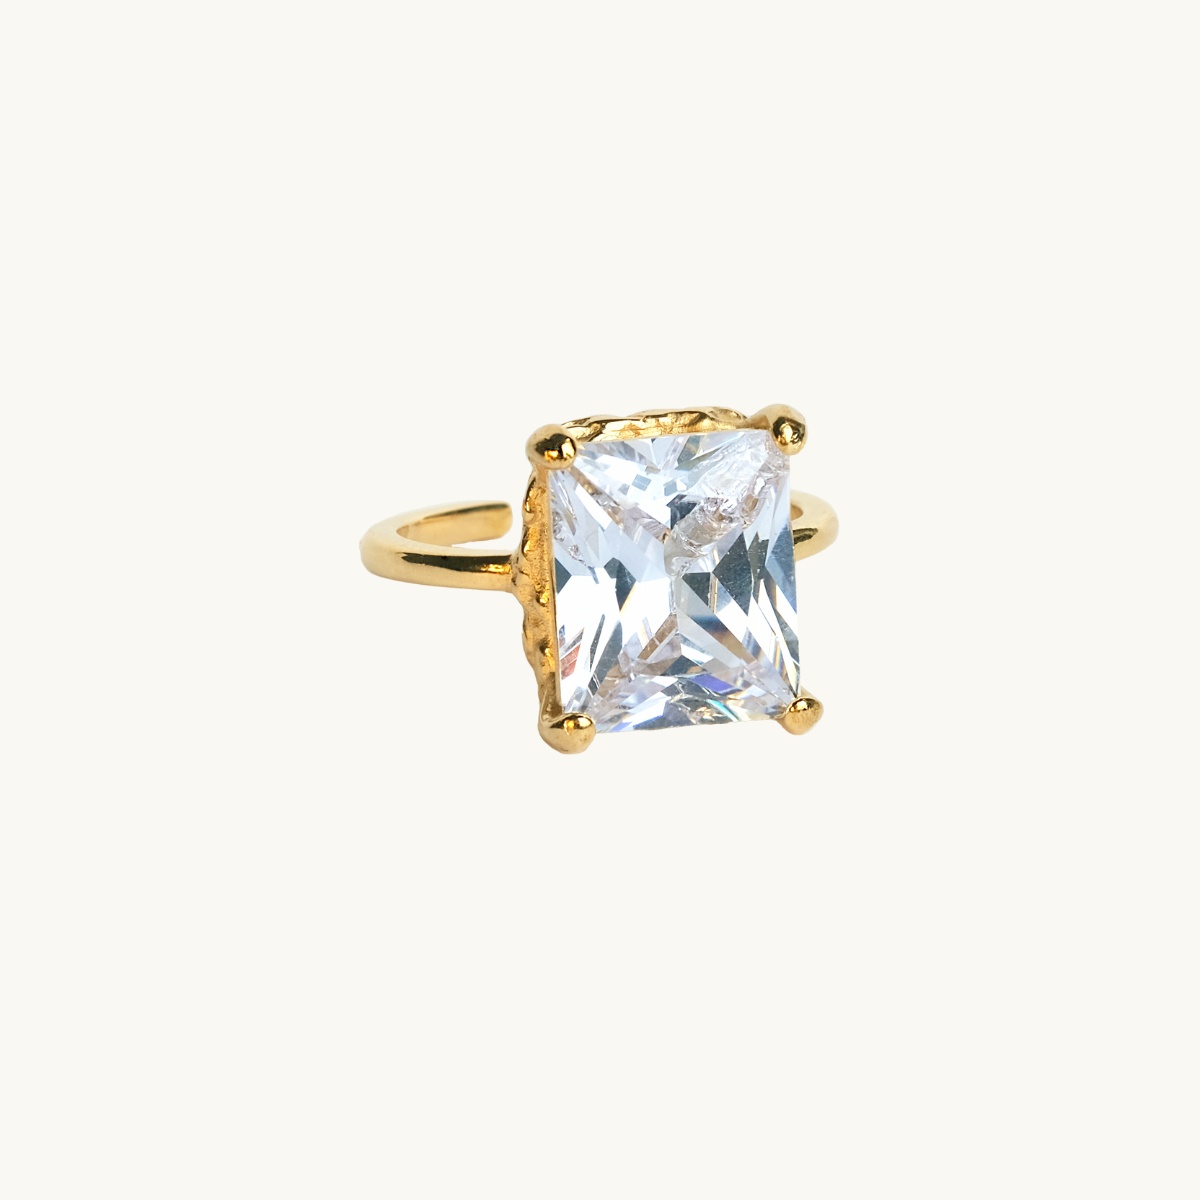 En ring i guld med en stor vit diamant